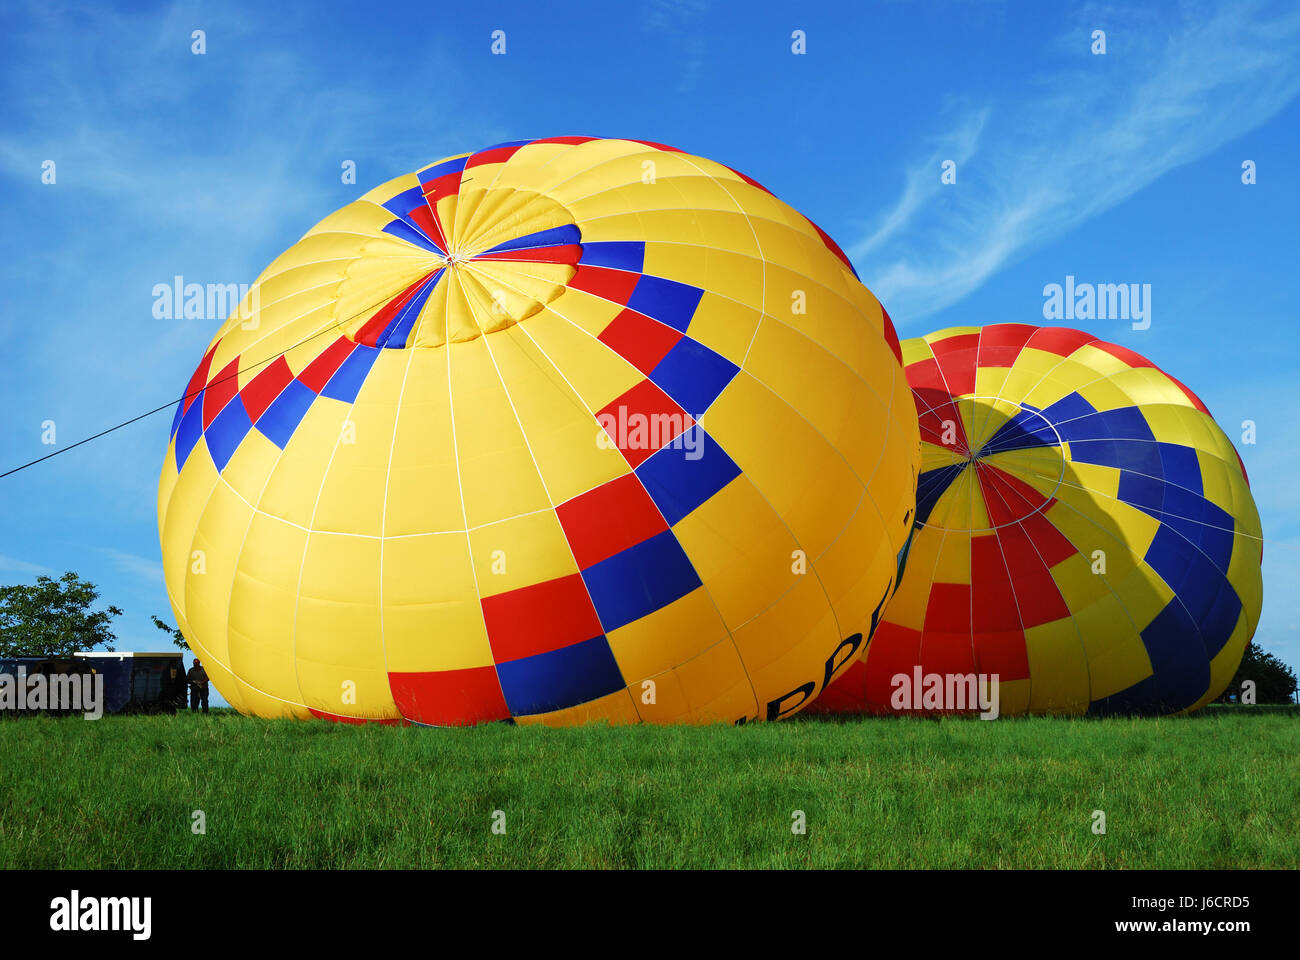 Hot hobby pallone aerostatico entusiasmo aria divertimento divertimento gioia gag scherzo Foto Stock